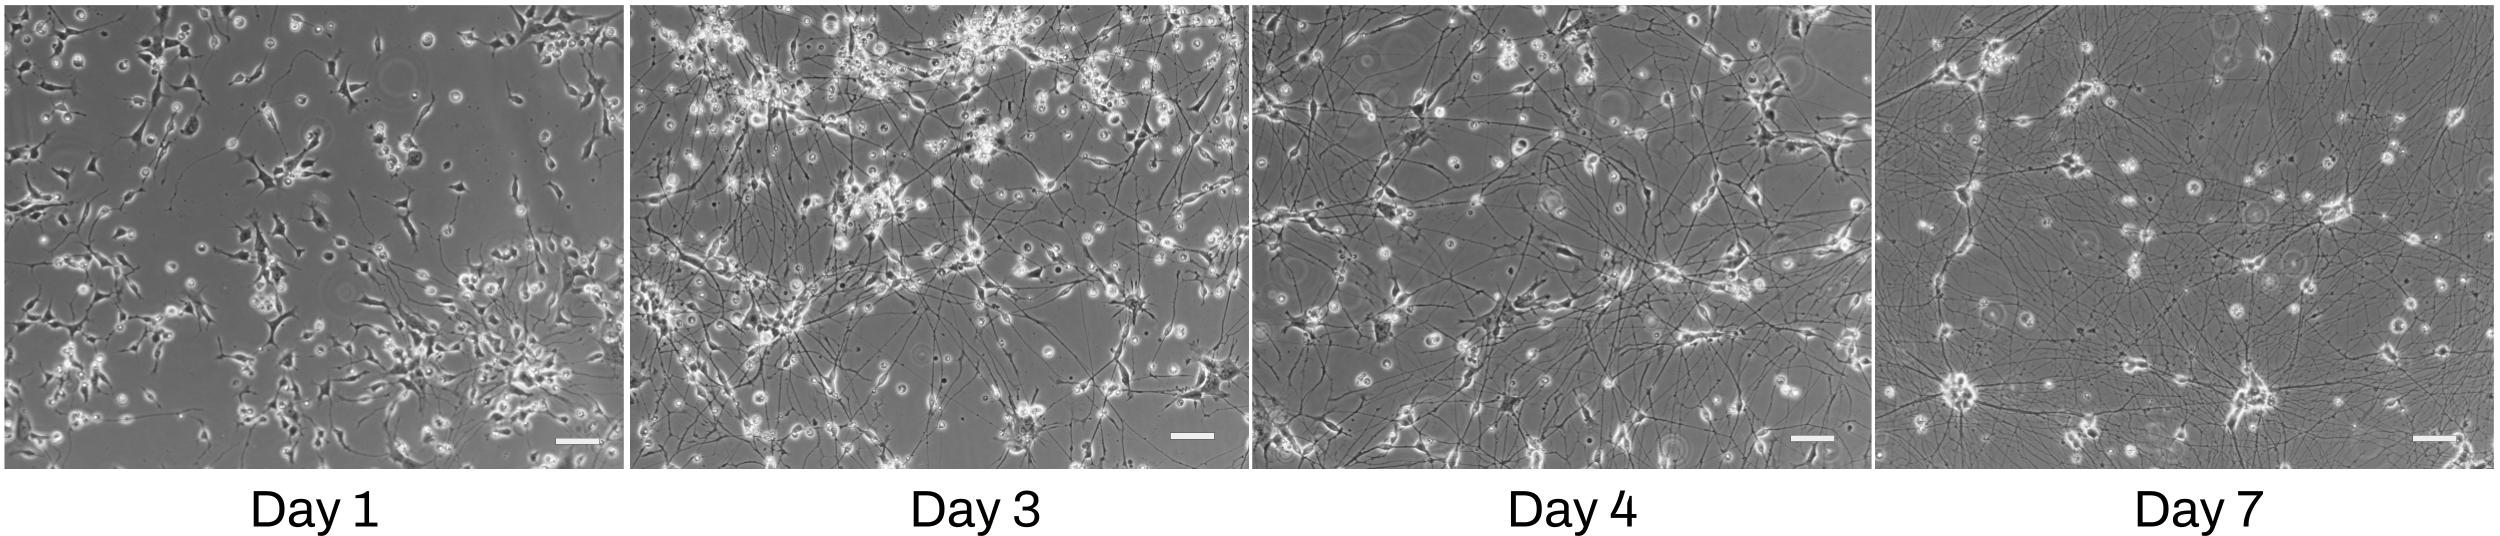 iPSC-derived Dopaminergic Neuron Phase Contrast Images